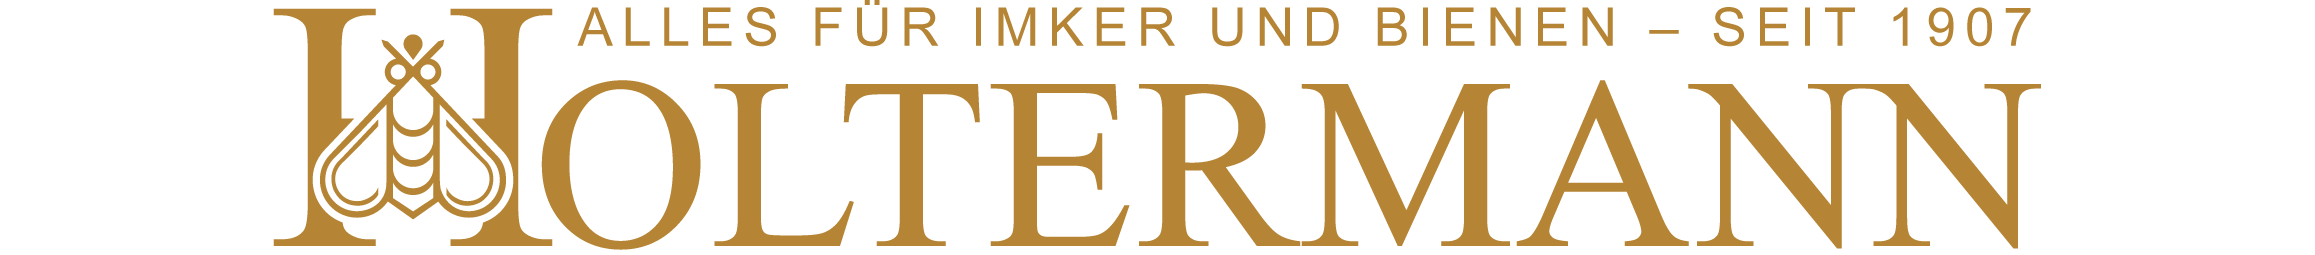 Holtermann Imker-Shop-Logo